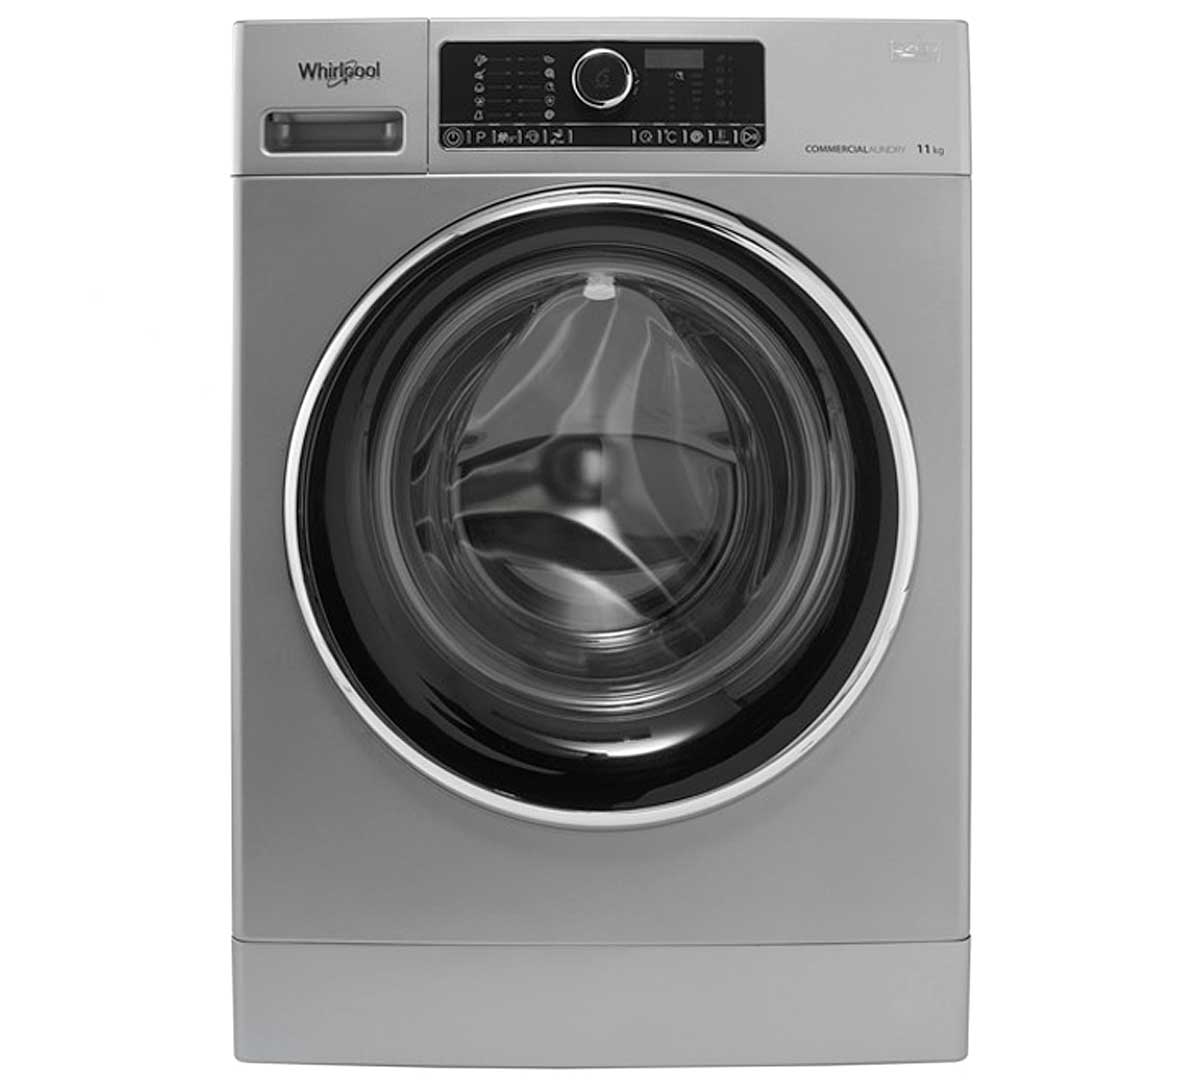 whirlpool-lavadora-awg-812-pro-01.jpg